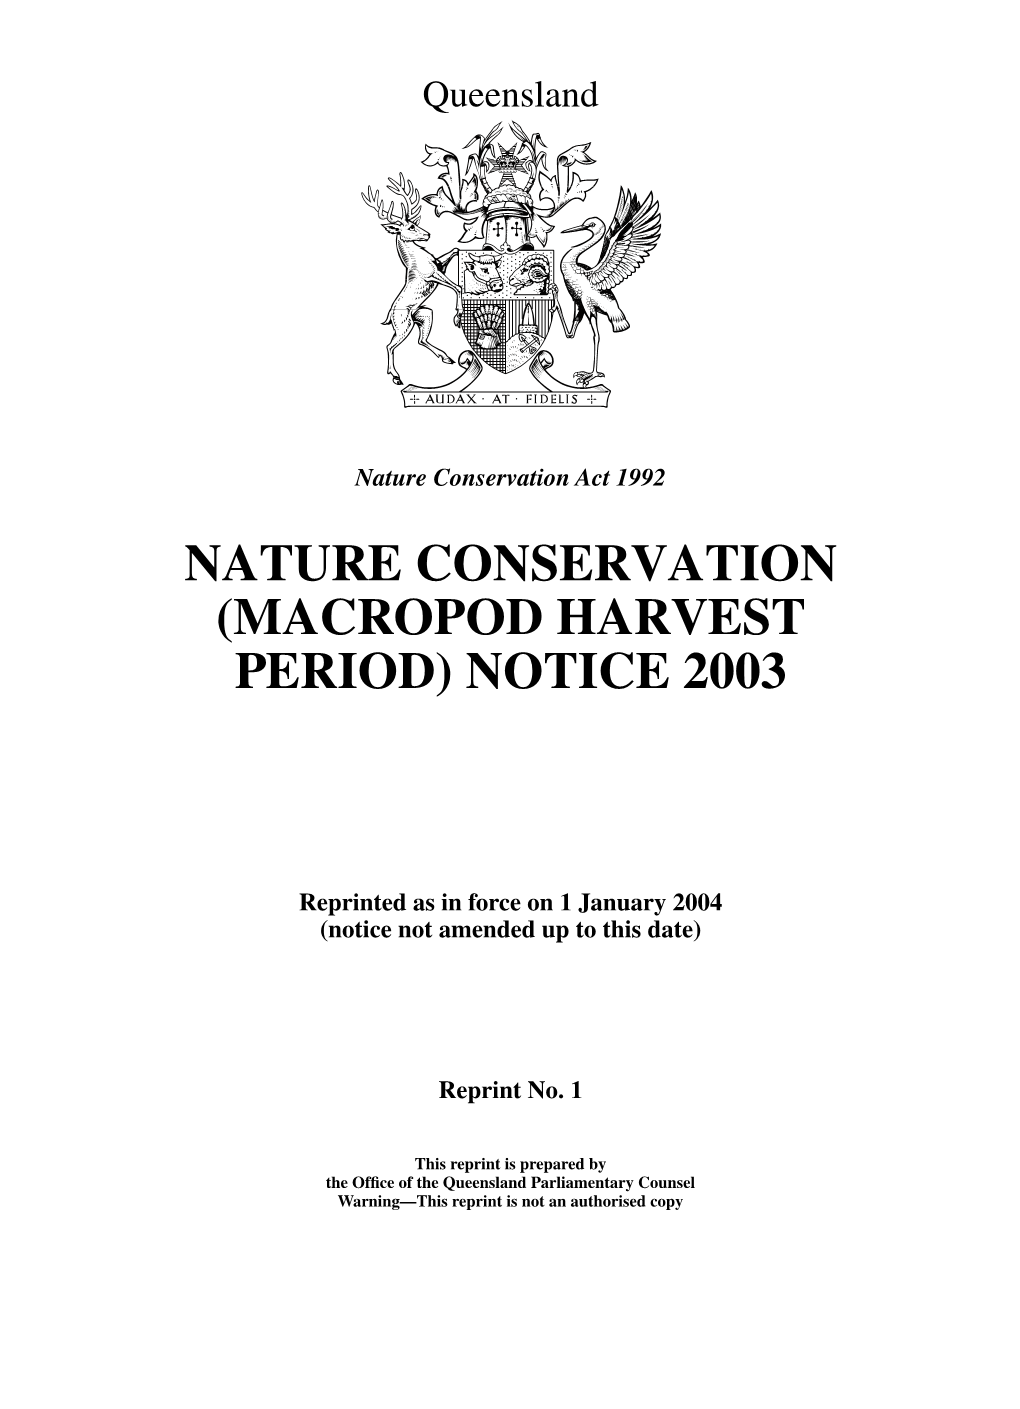 Nature Conservation (Macropod Harvest Period) Notice 2003